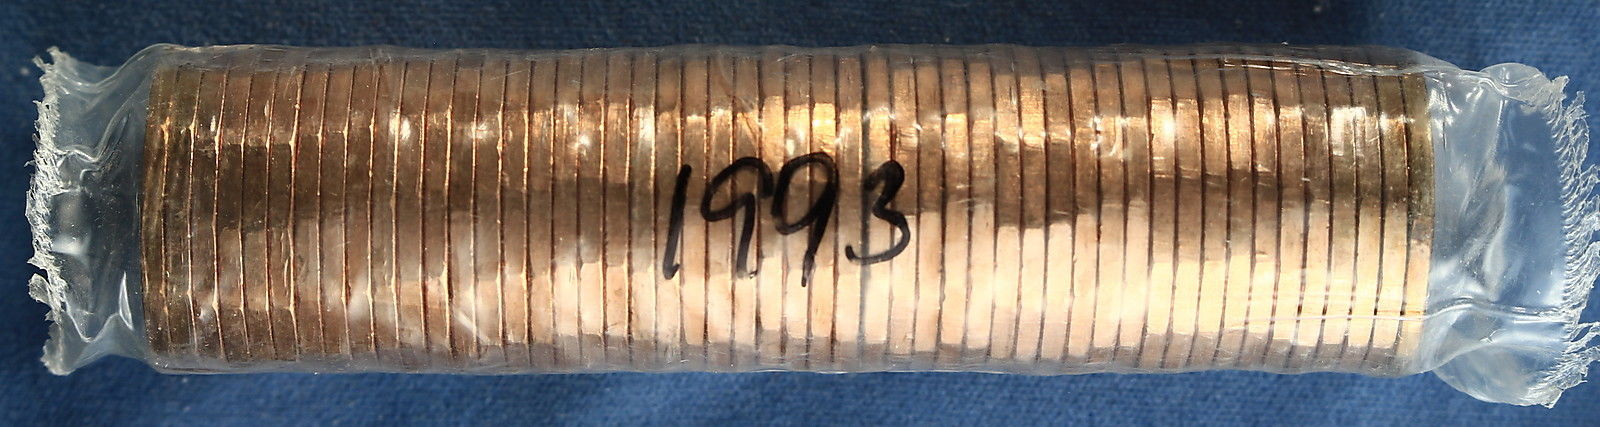 Canada 1993 Original Mint Roll of Pennies   1